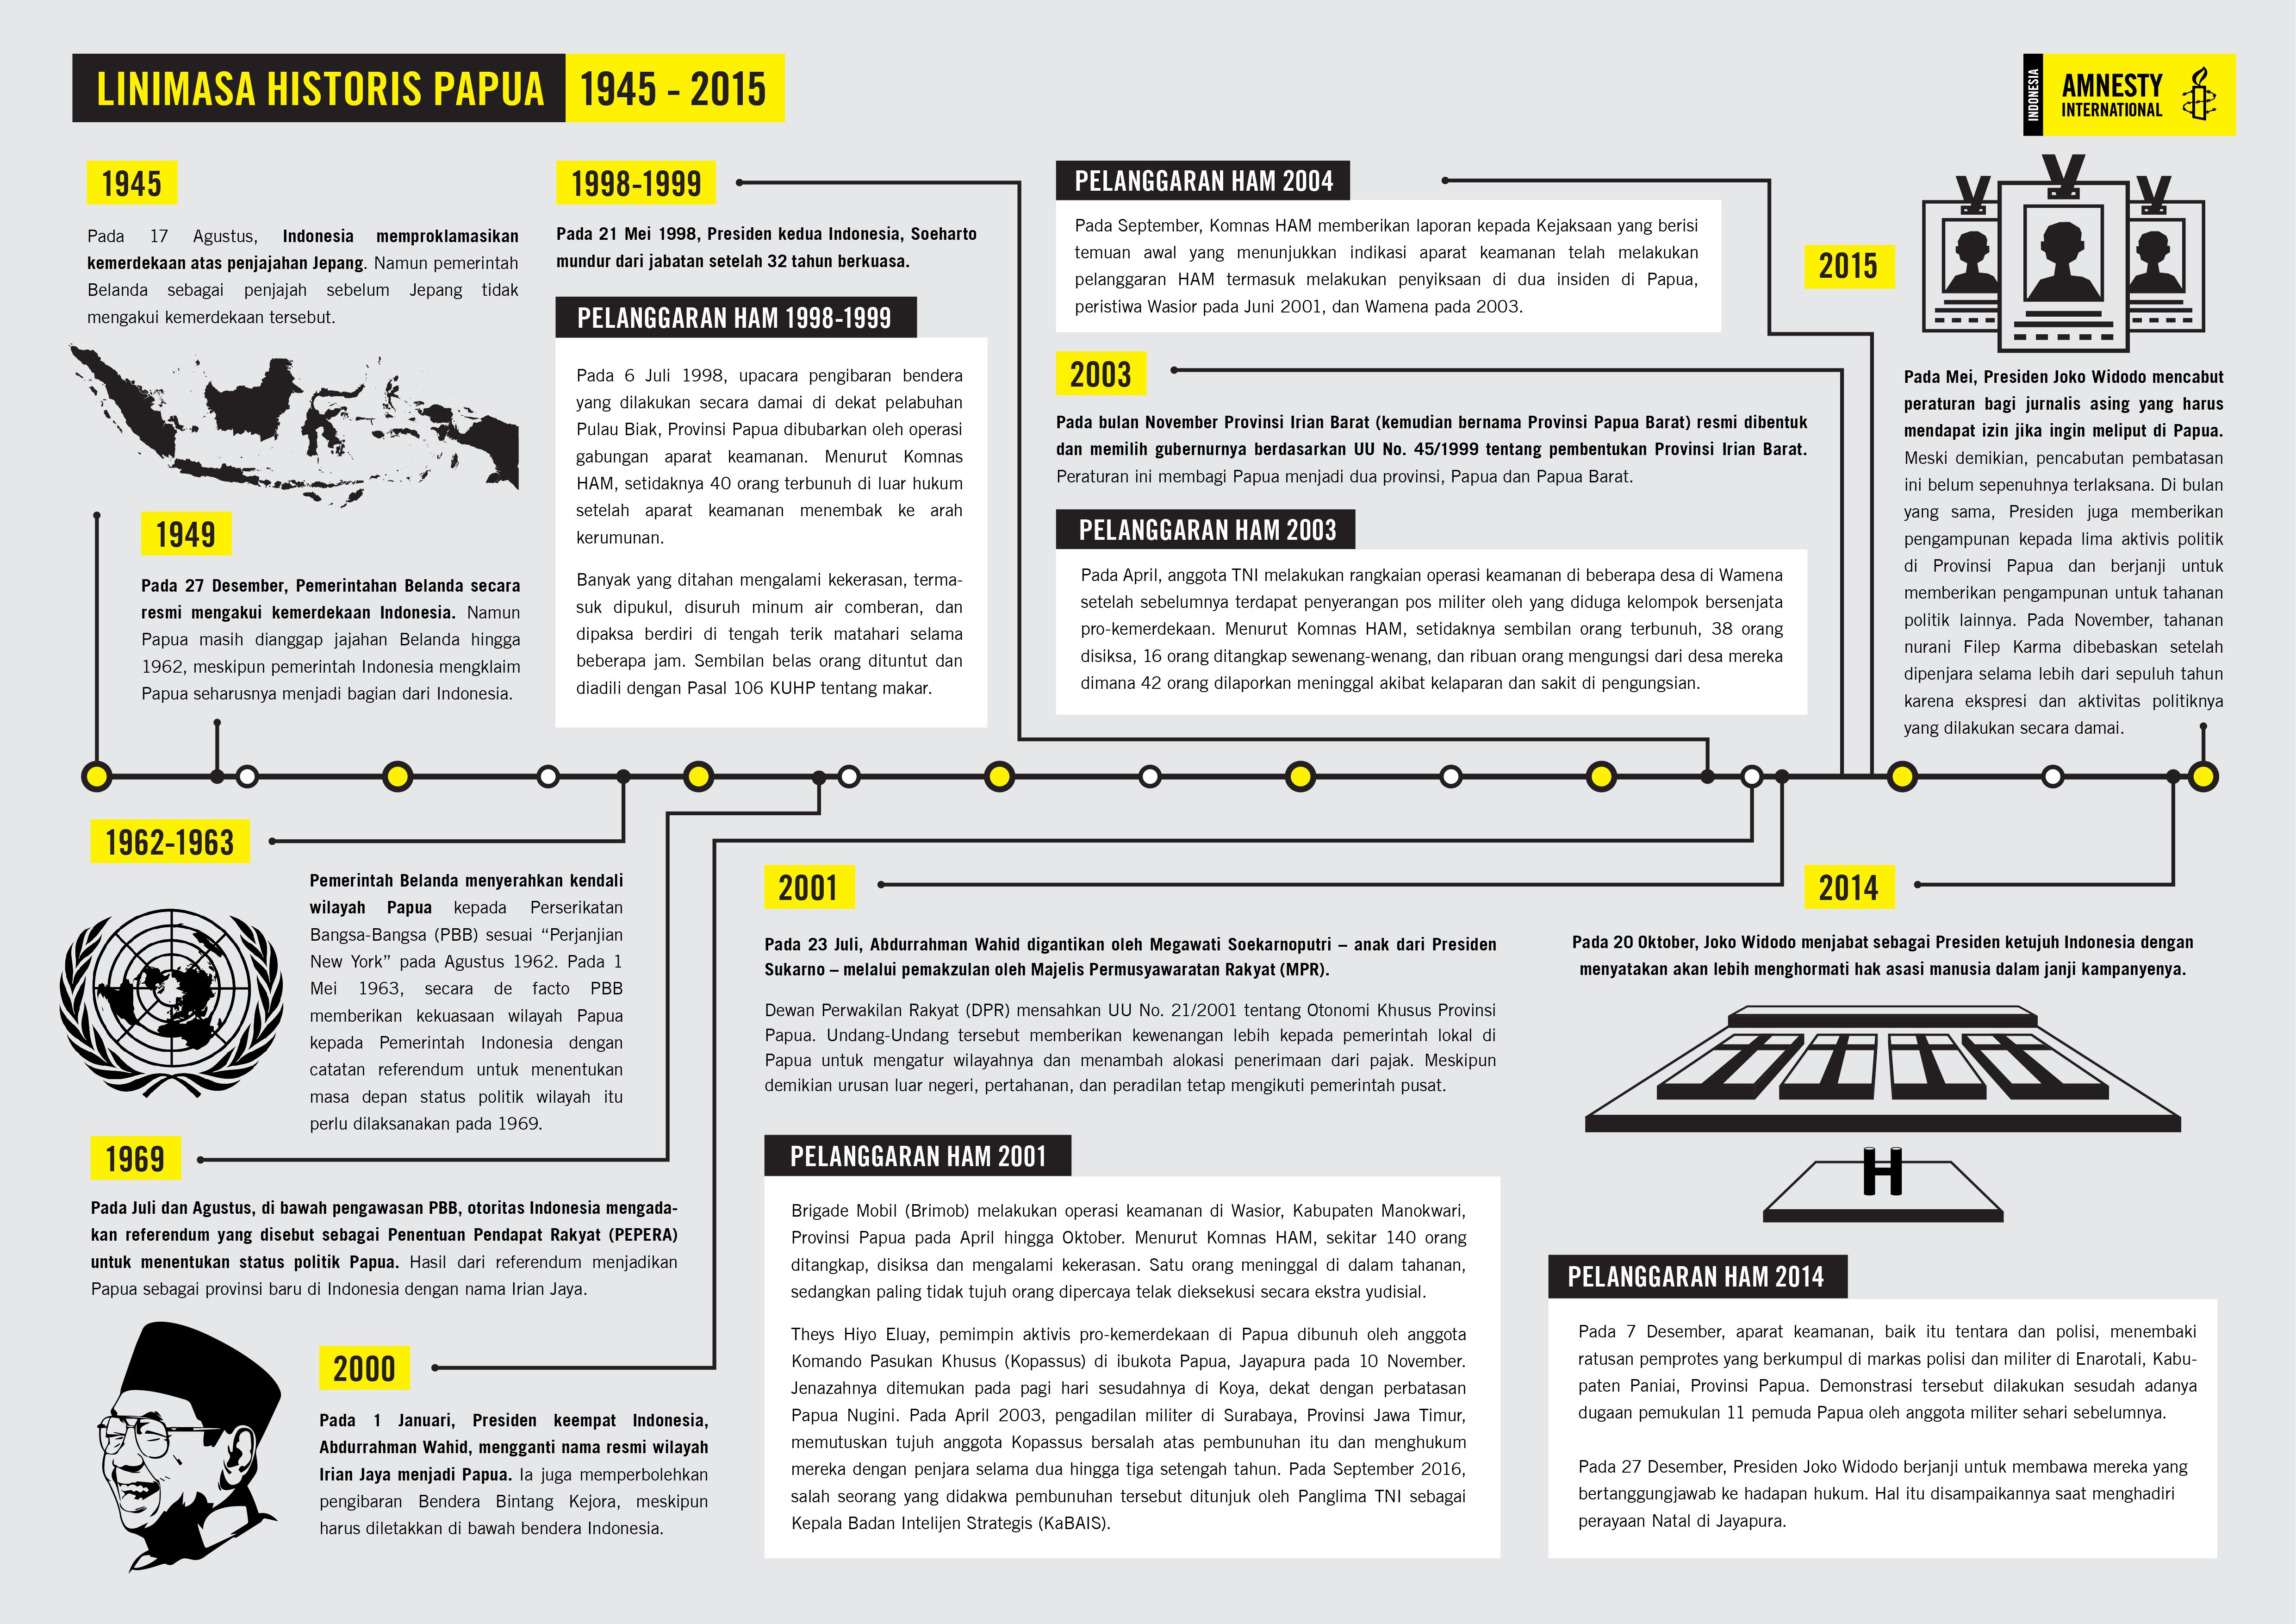 Infografis linimasa historis Papua tahun 1945-2015